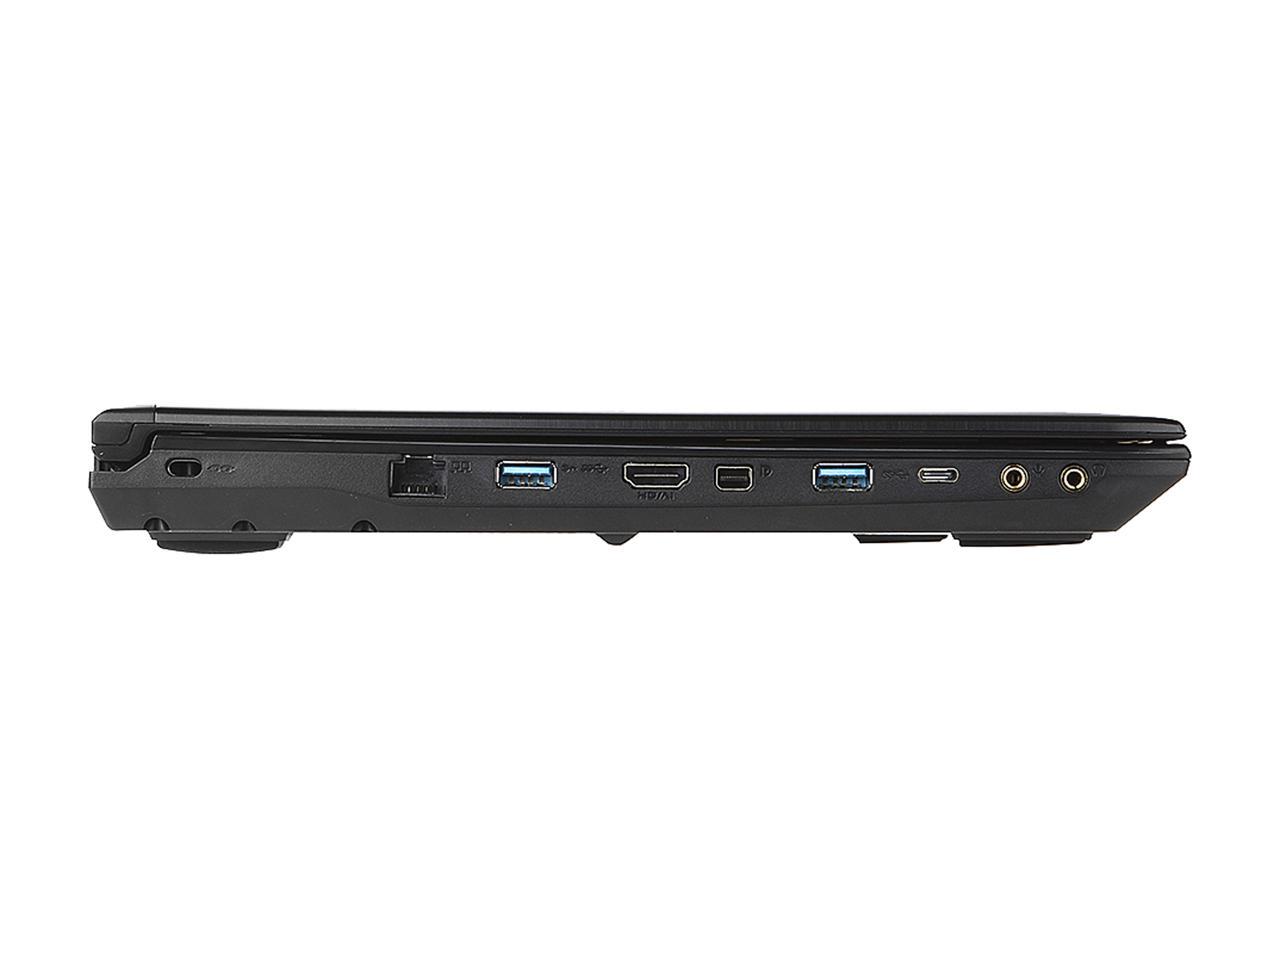 MSI CX62 6QD-047US Gaming Laptop Intel Core i5-6300HQ 2.3 GHz 15.6